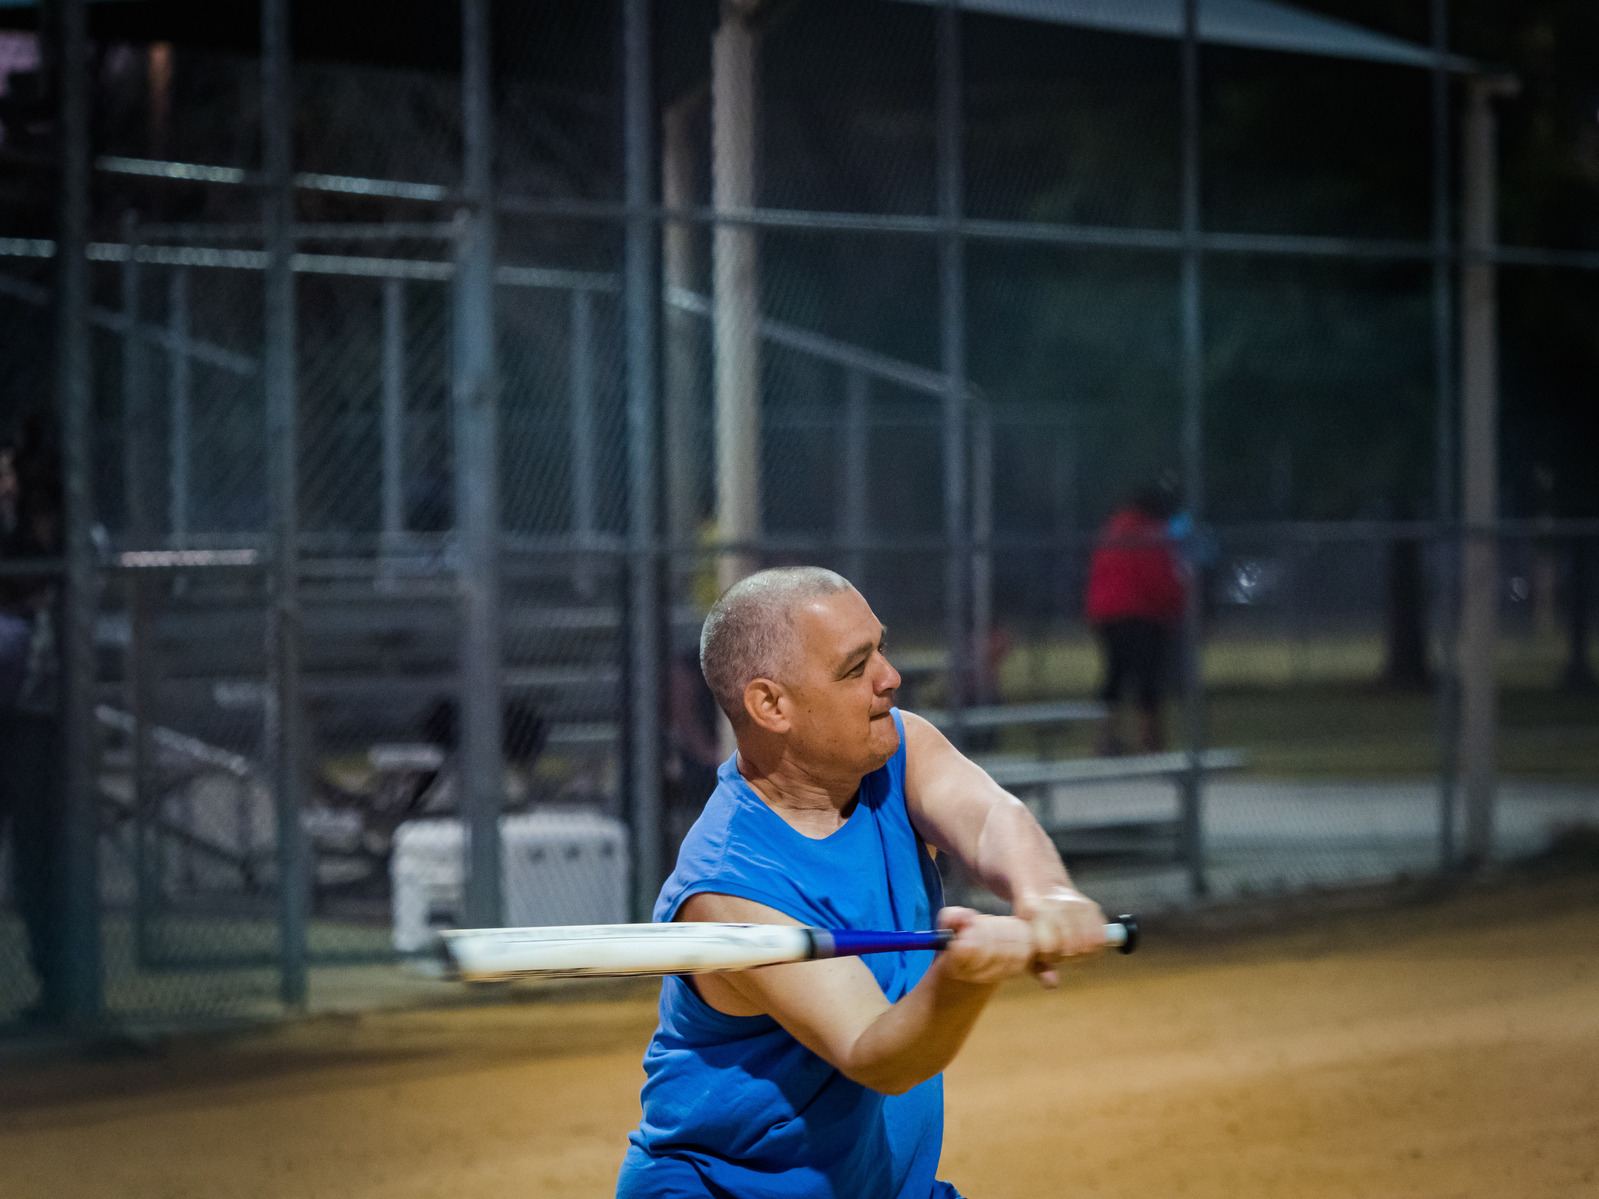 A man in a blue shirt hits a baseball with a bat.